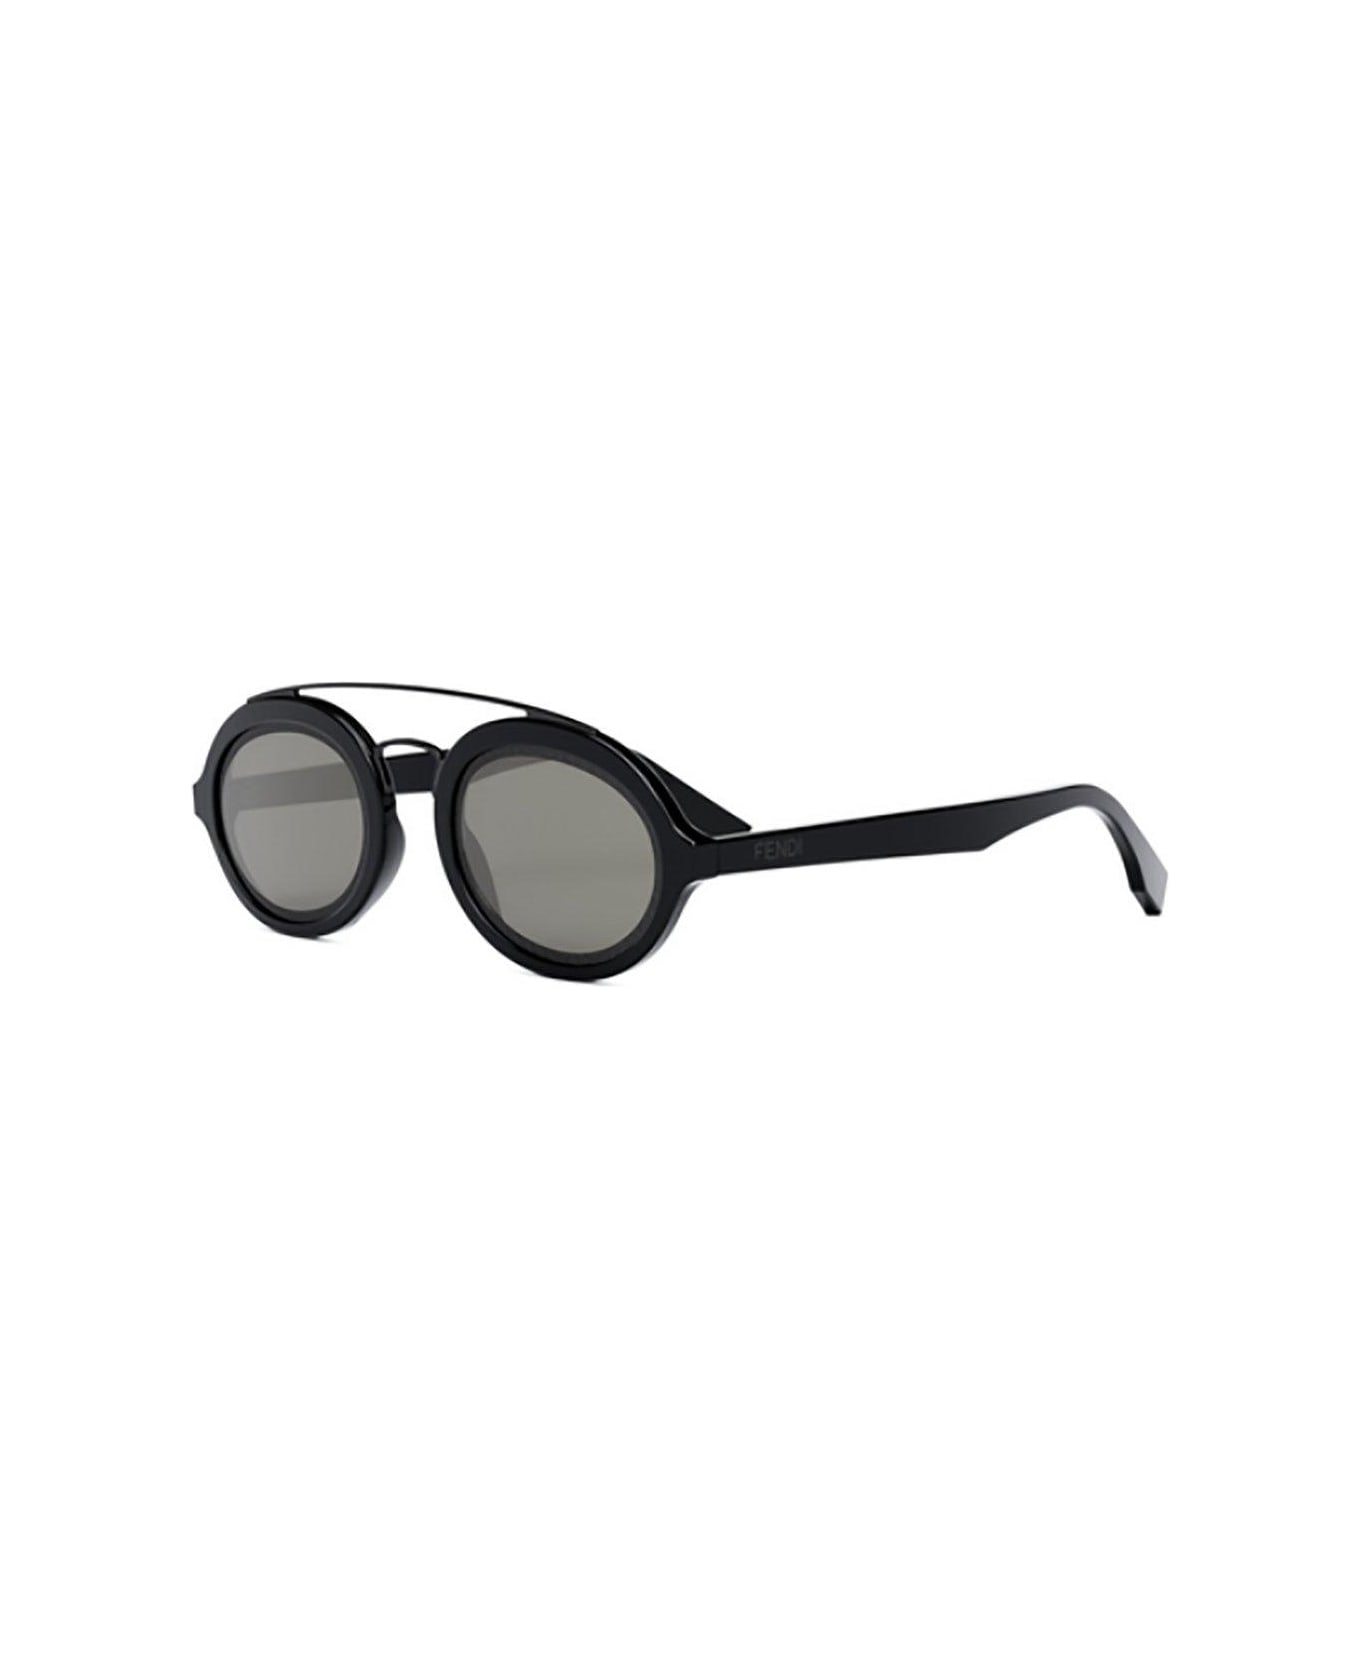 Fendi Eyewear Oval Frame Sunglasses - 01a サングラス